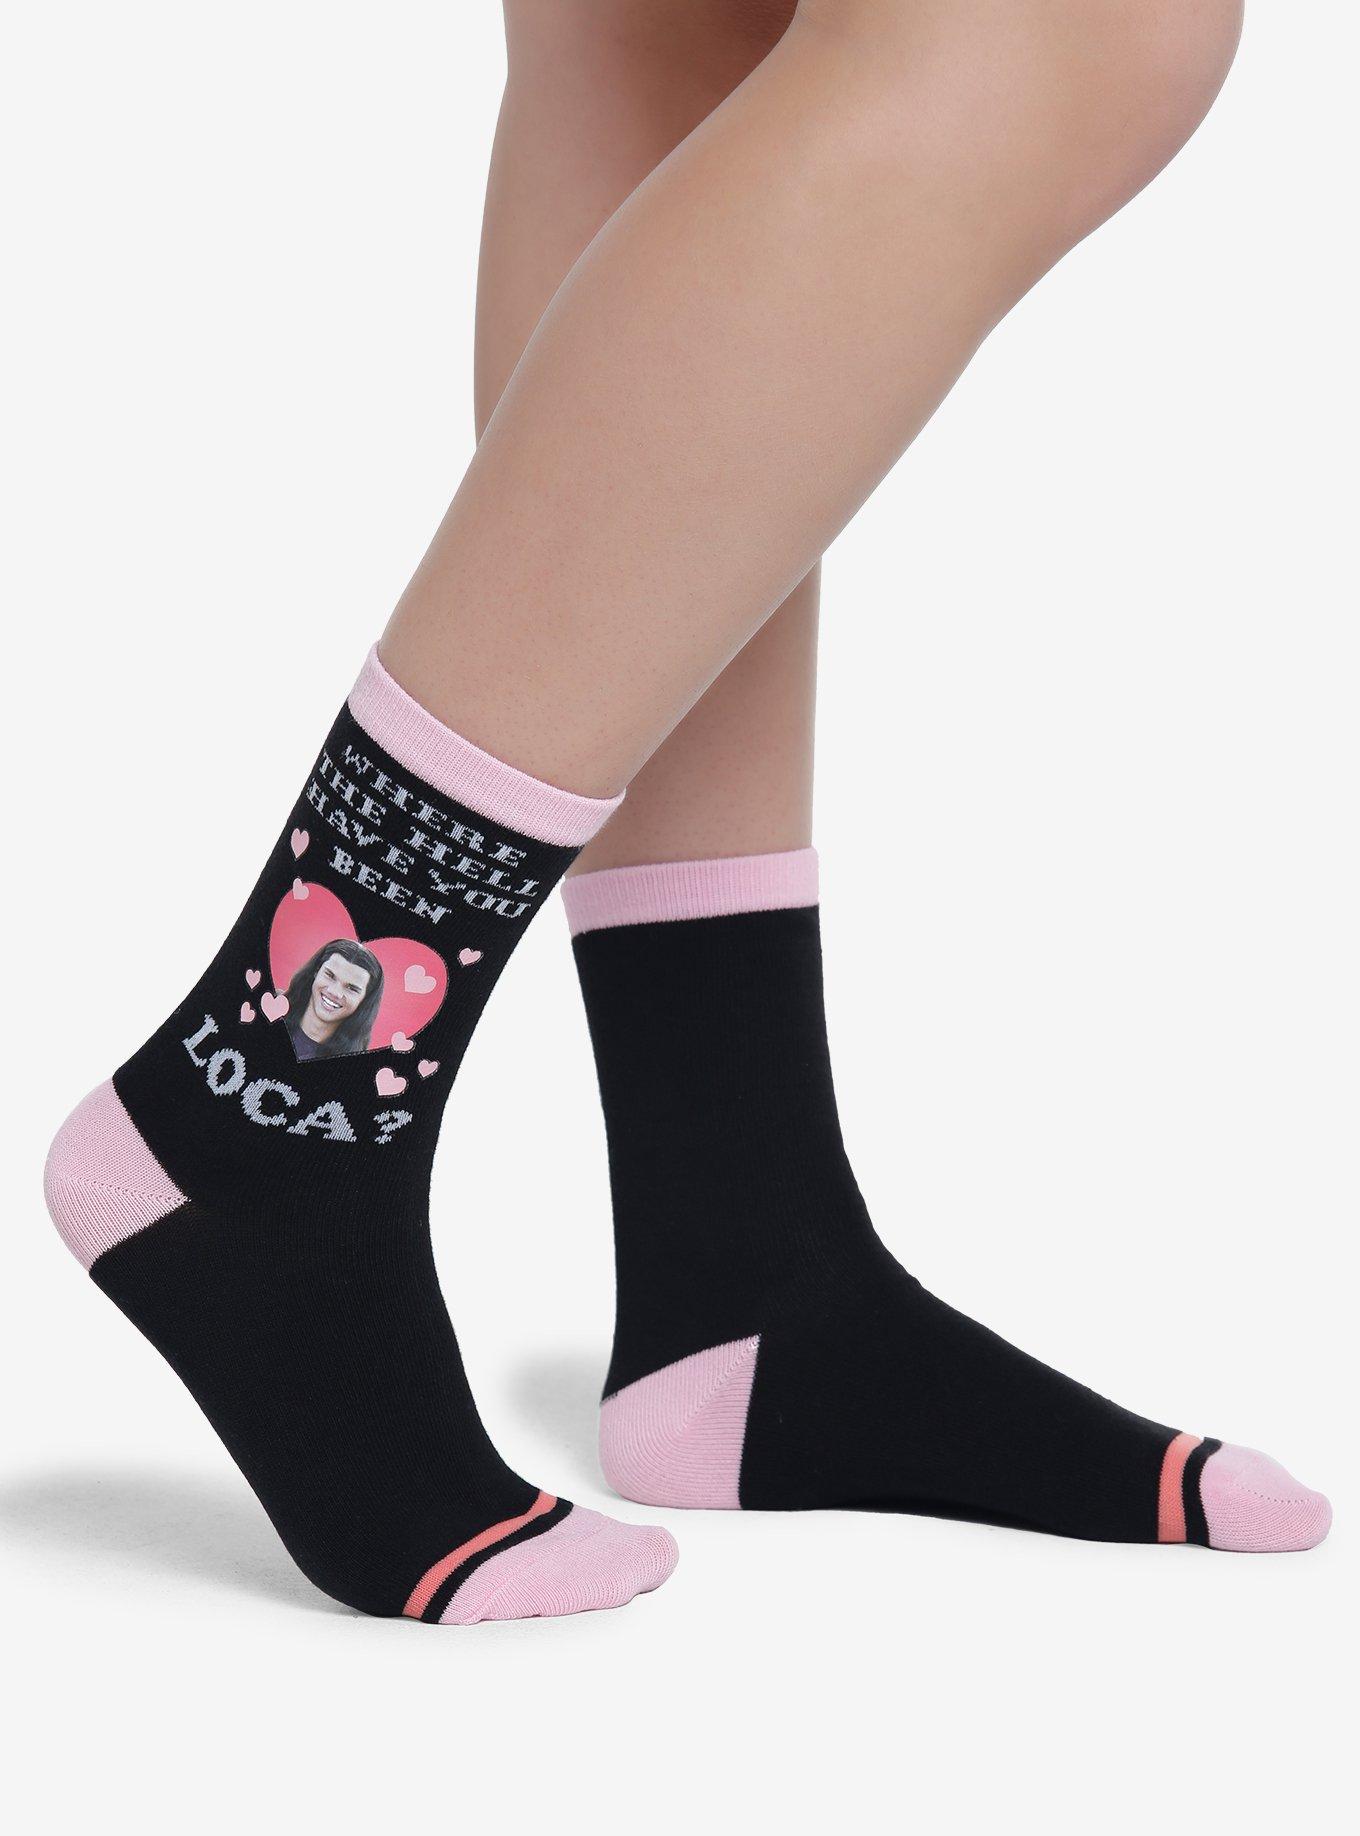 for Bare Feet NFL Big Diamond Socks